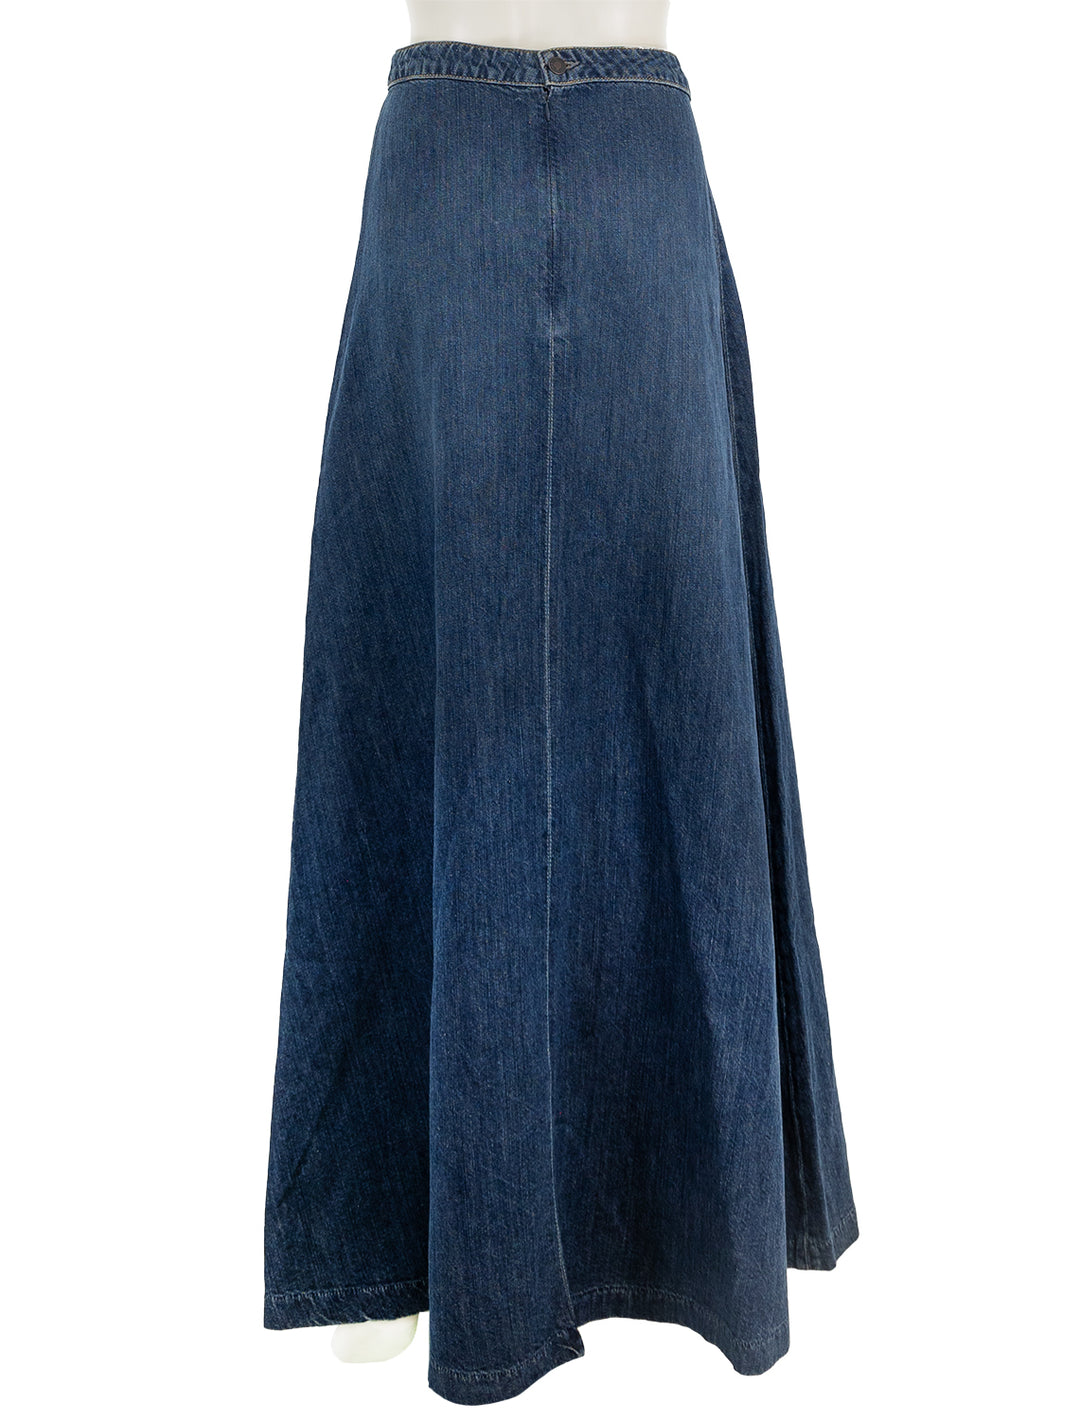 Back view of Nili Lotan's astrid denim skirt in classic wash.